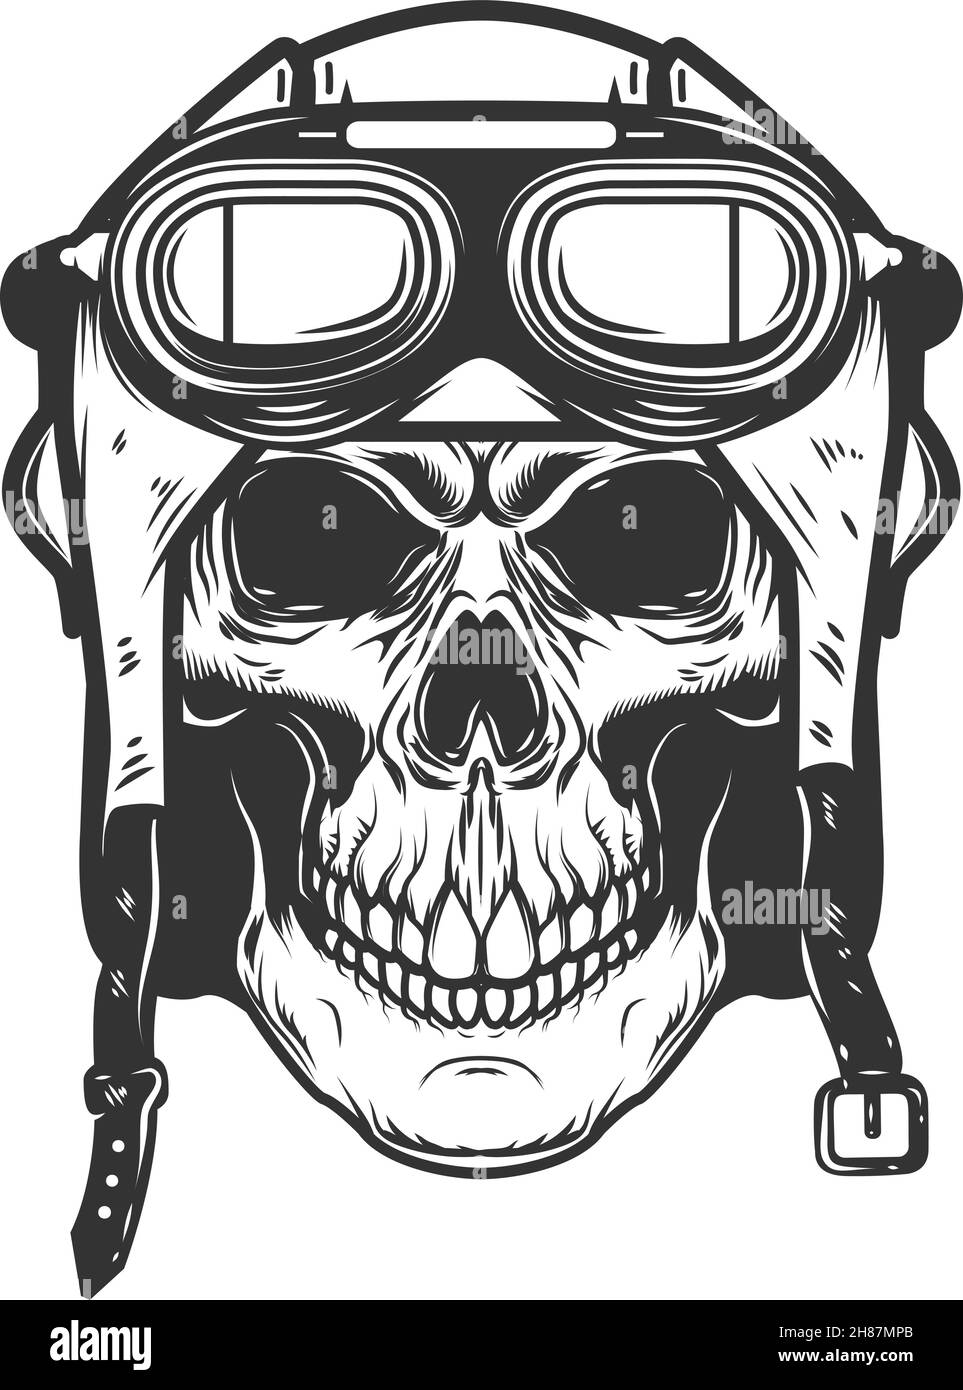 Aviator skull in aviators helmet. Design element for logo, label, sign, emblem. Vector illustration Stock Vector